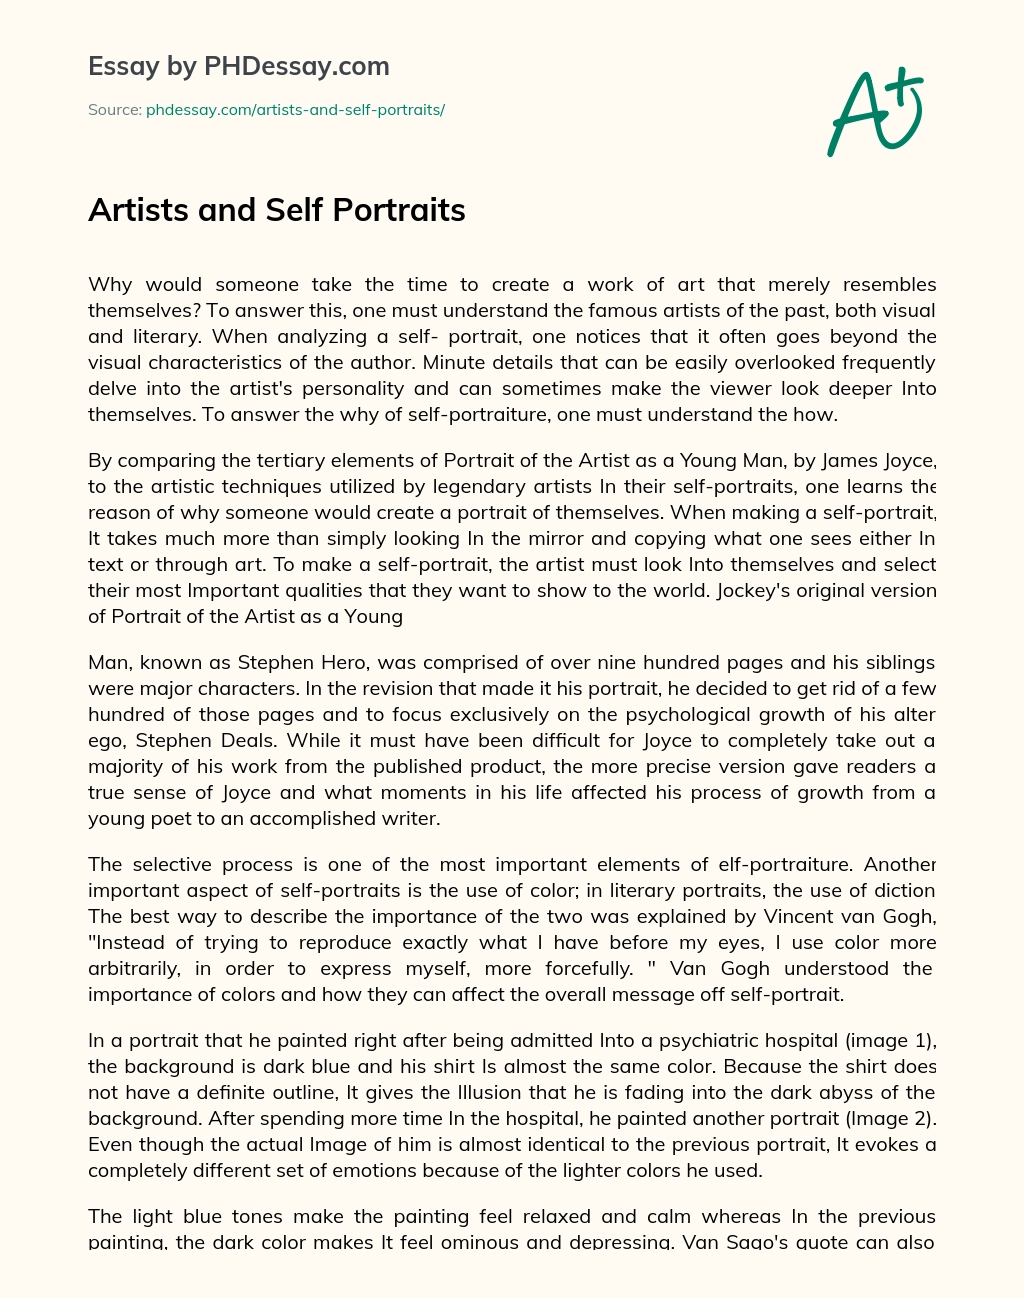 Artists and Self Portraits essay